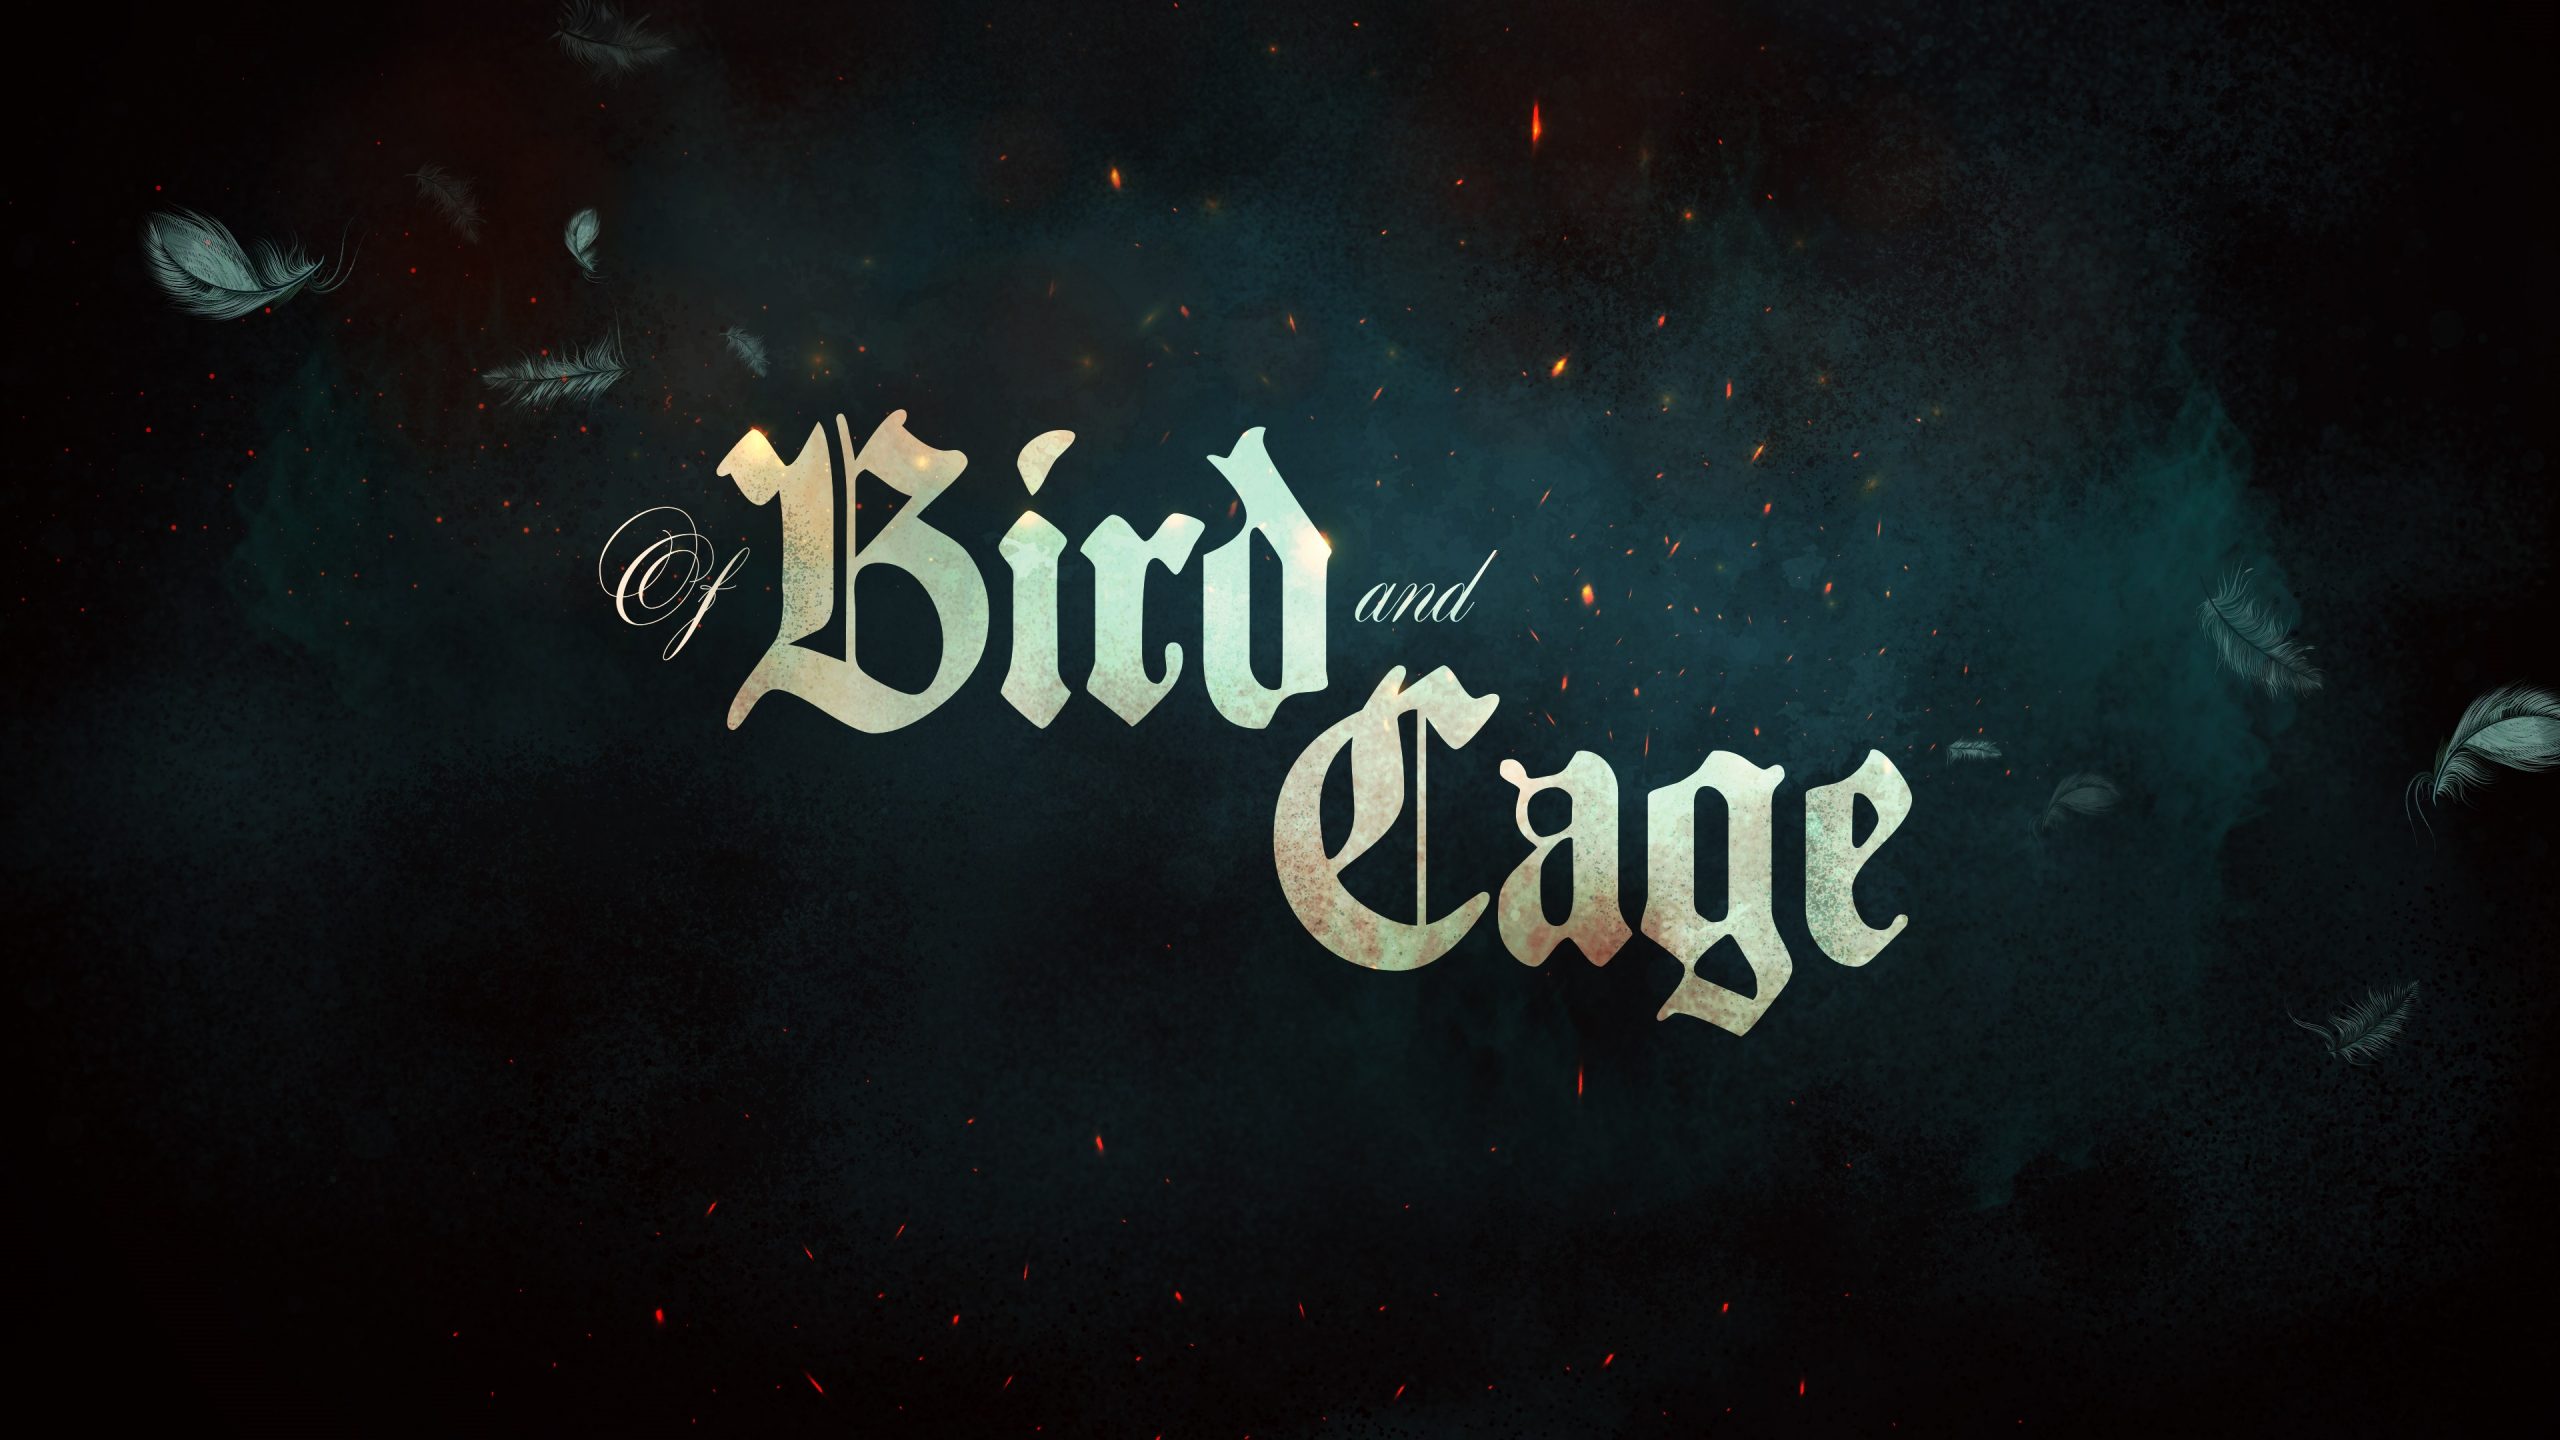 Bird and cage logo